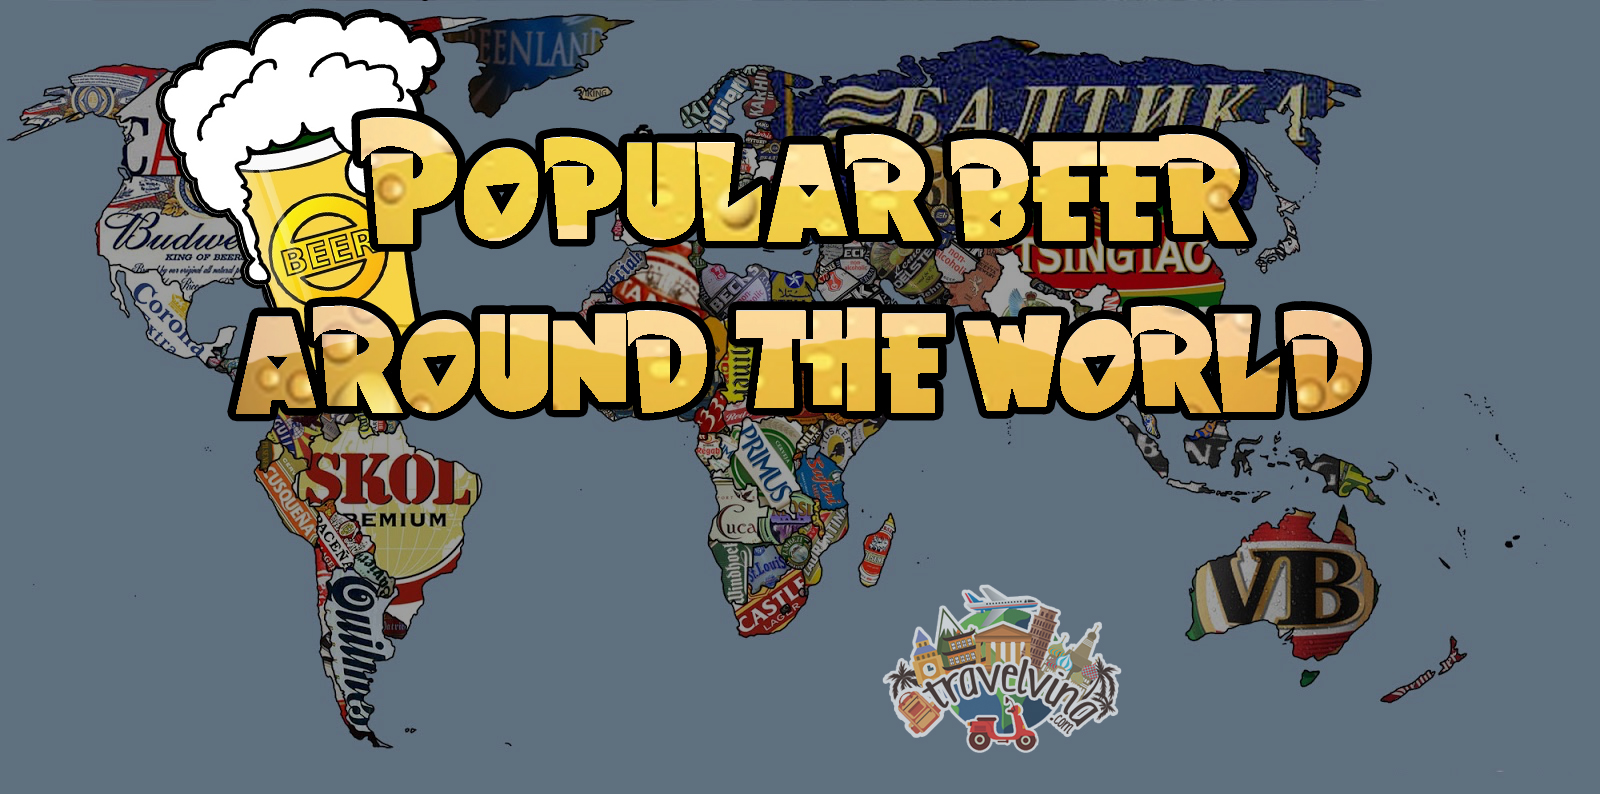 Popular beer around the world